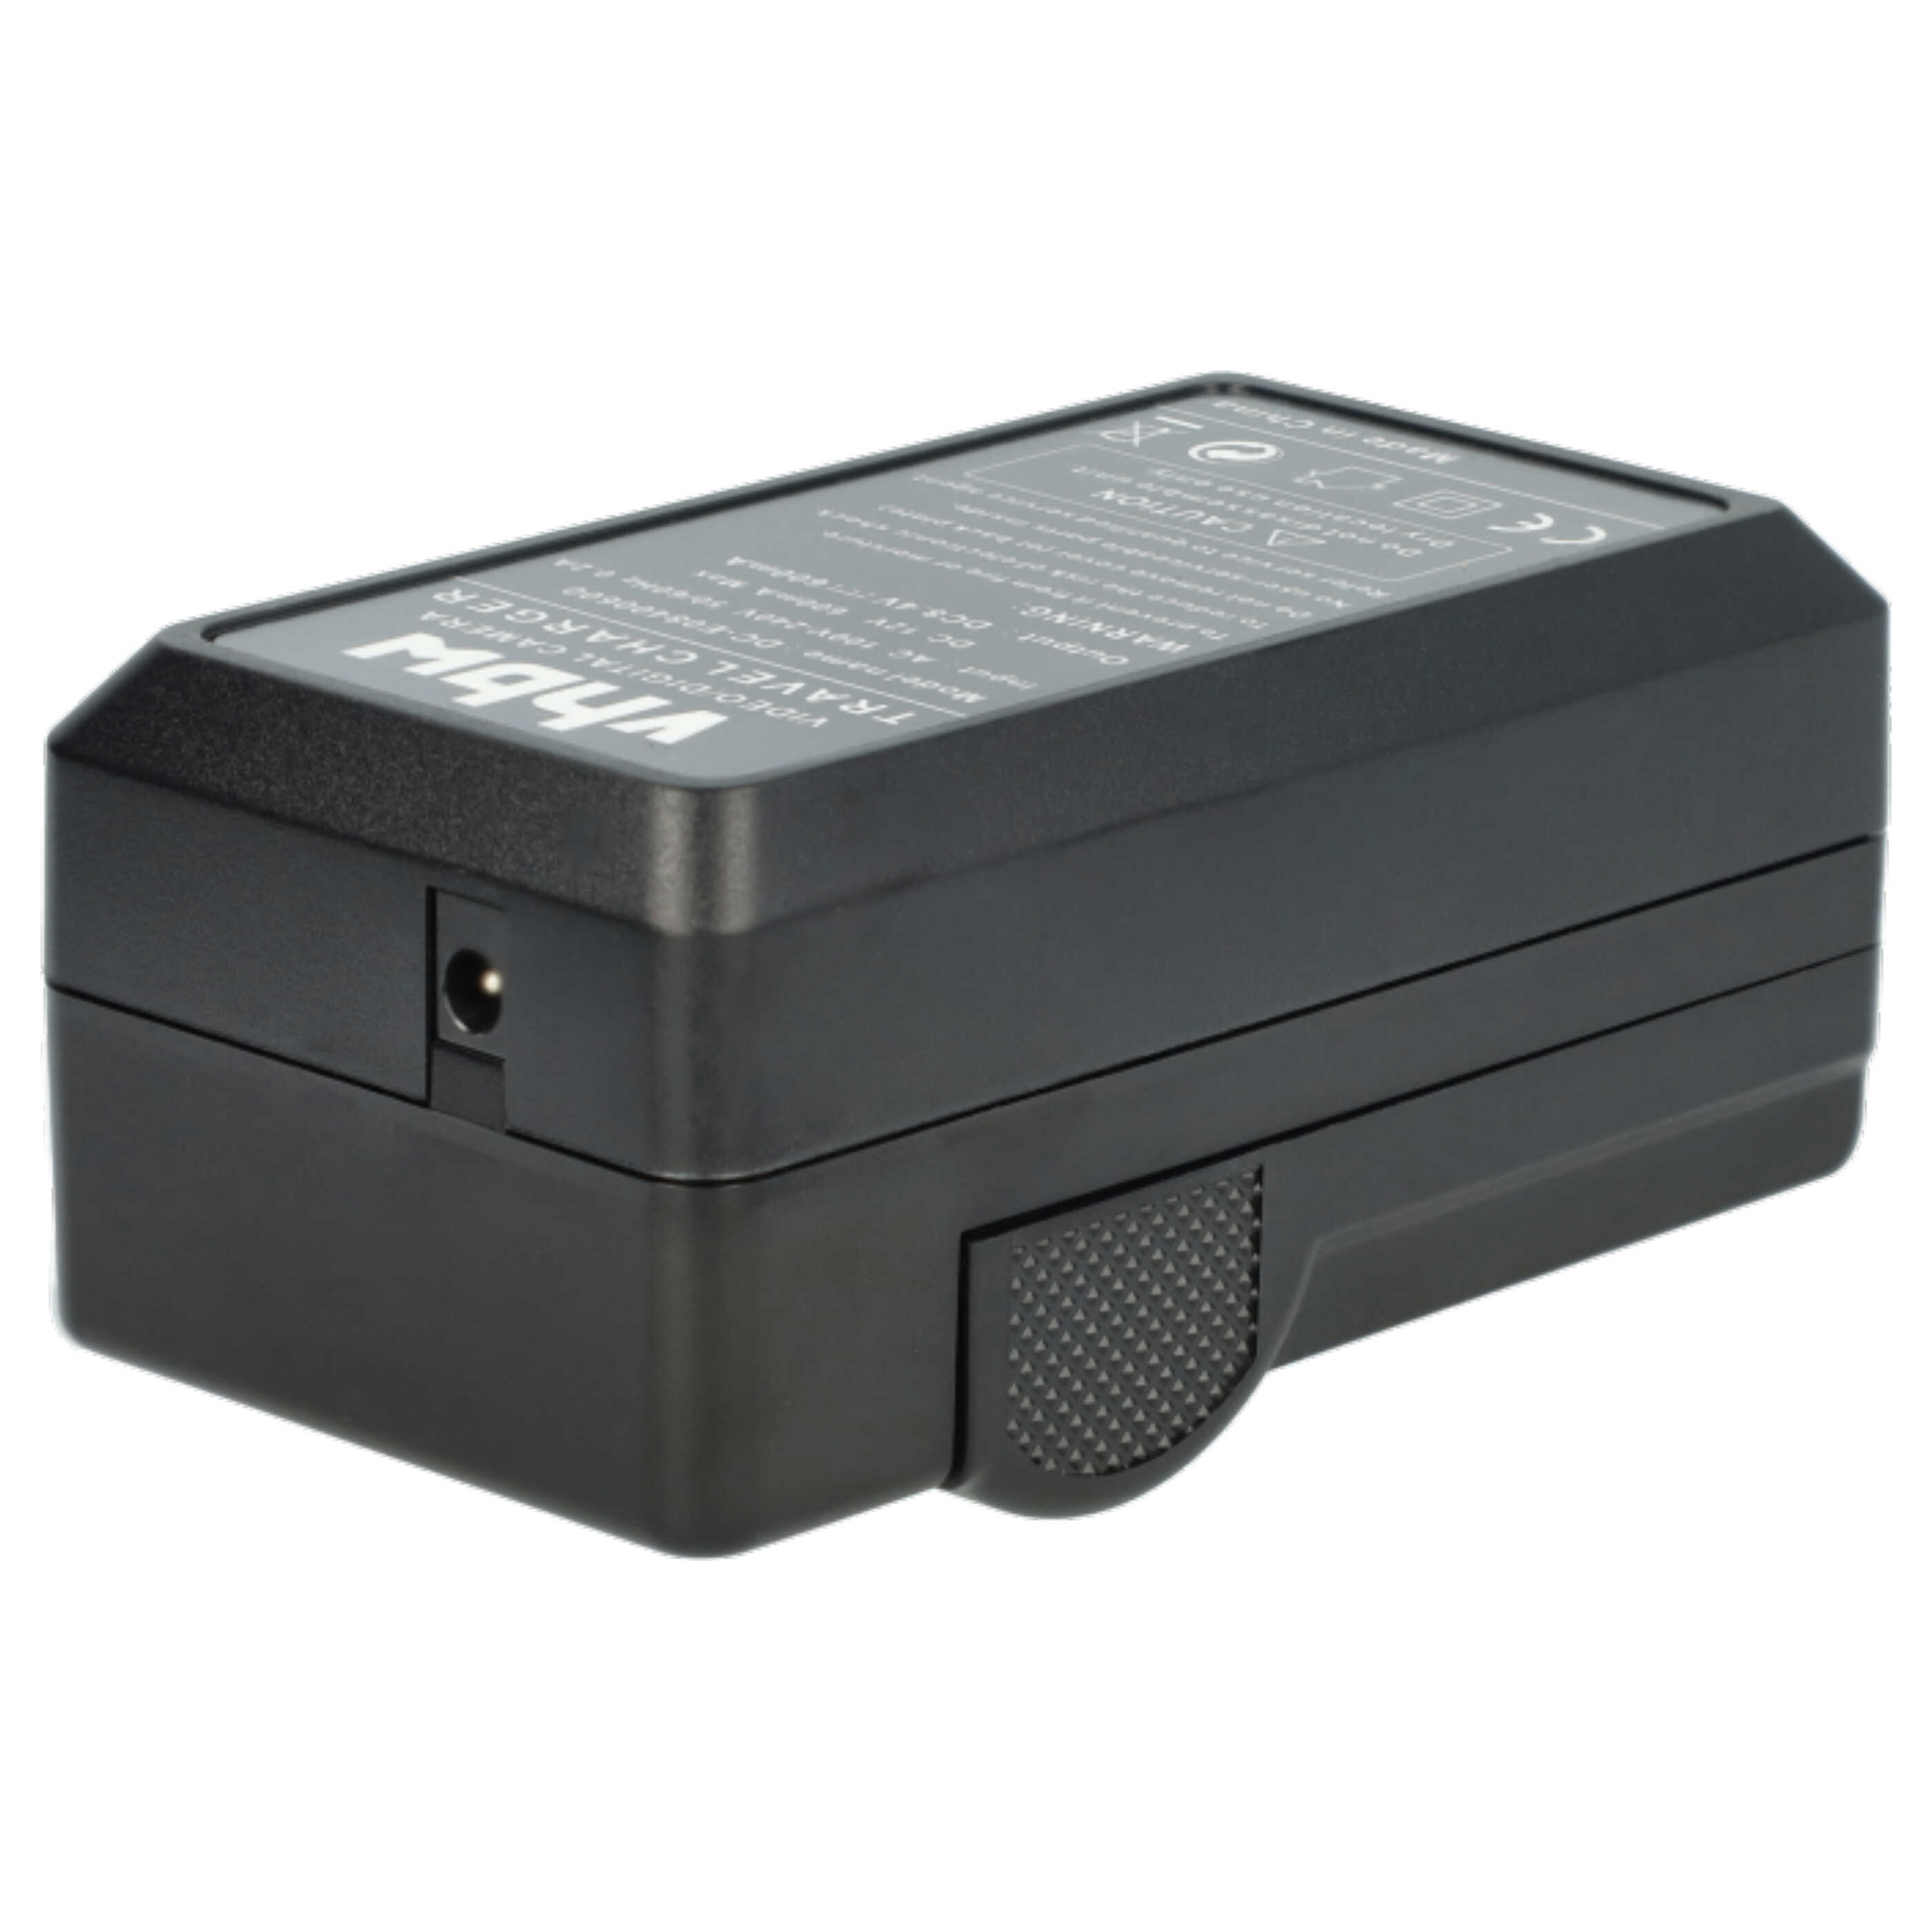 Akku Ladegerät passend für SD1 Merrill Kamera u.a. - 0,6 A, 8,4 V